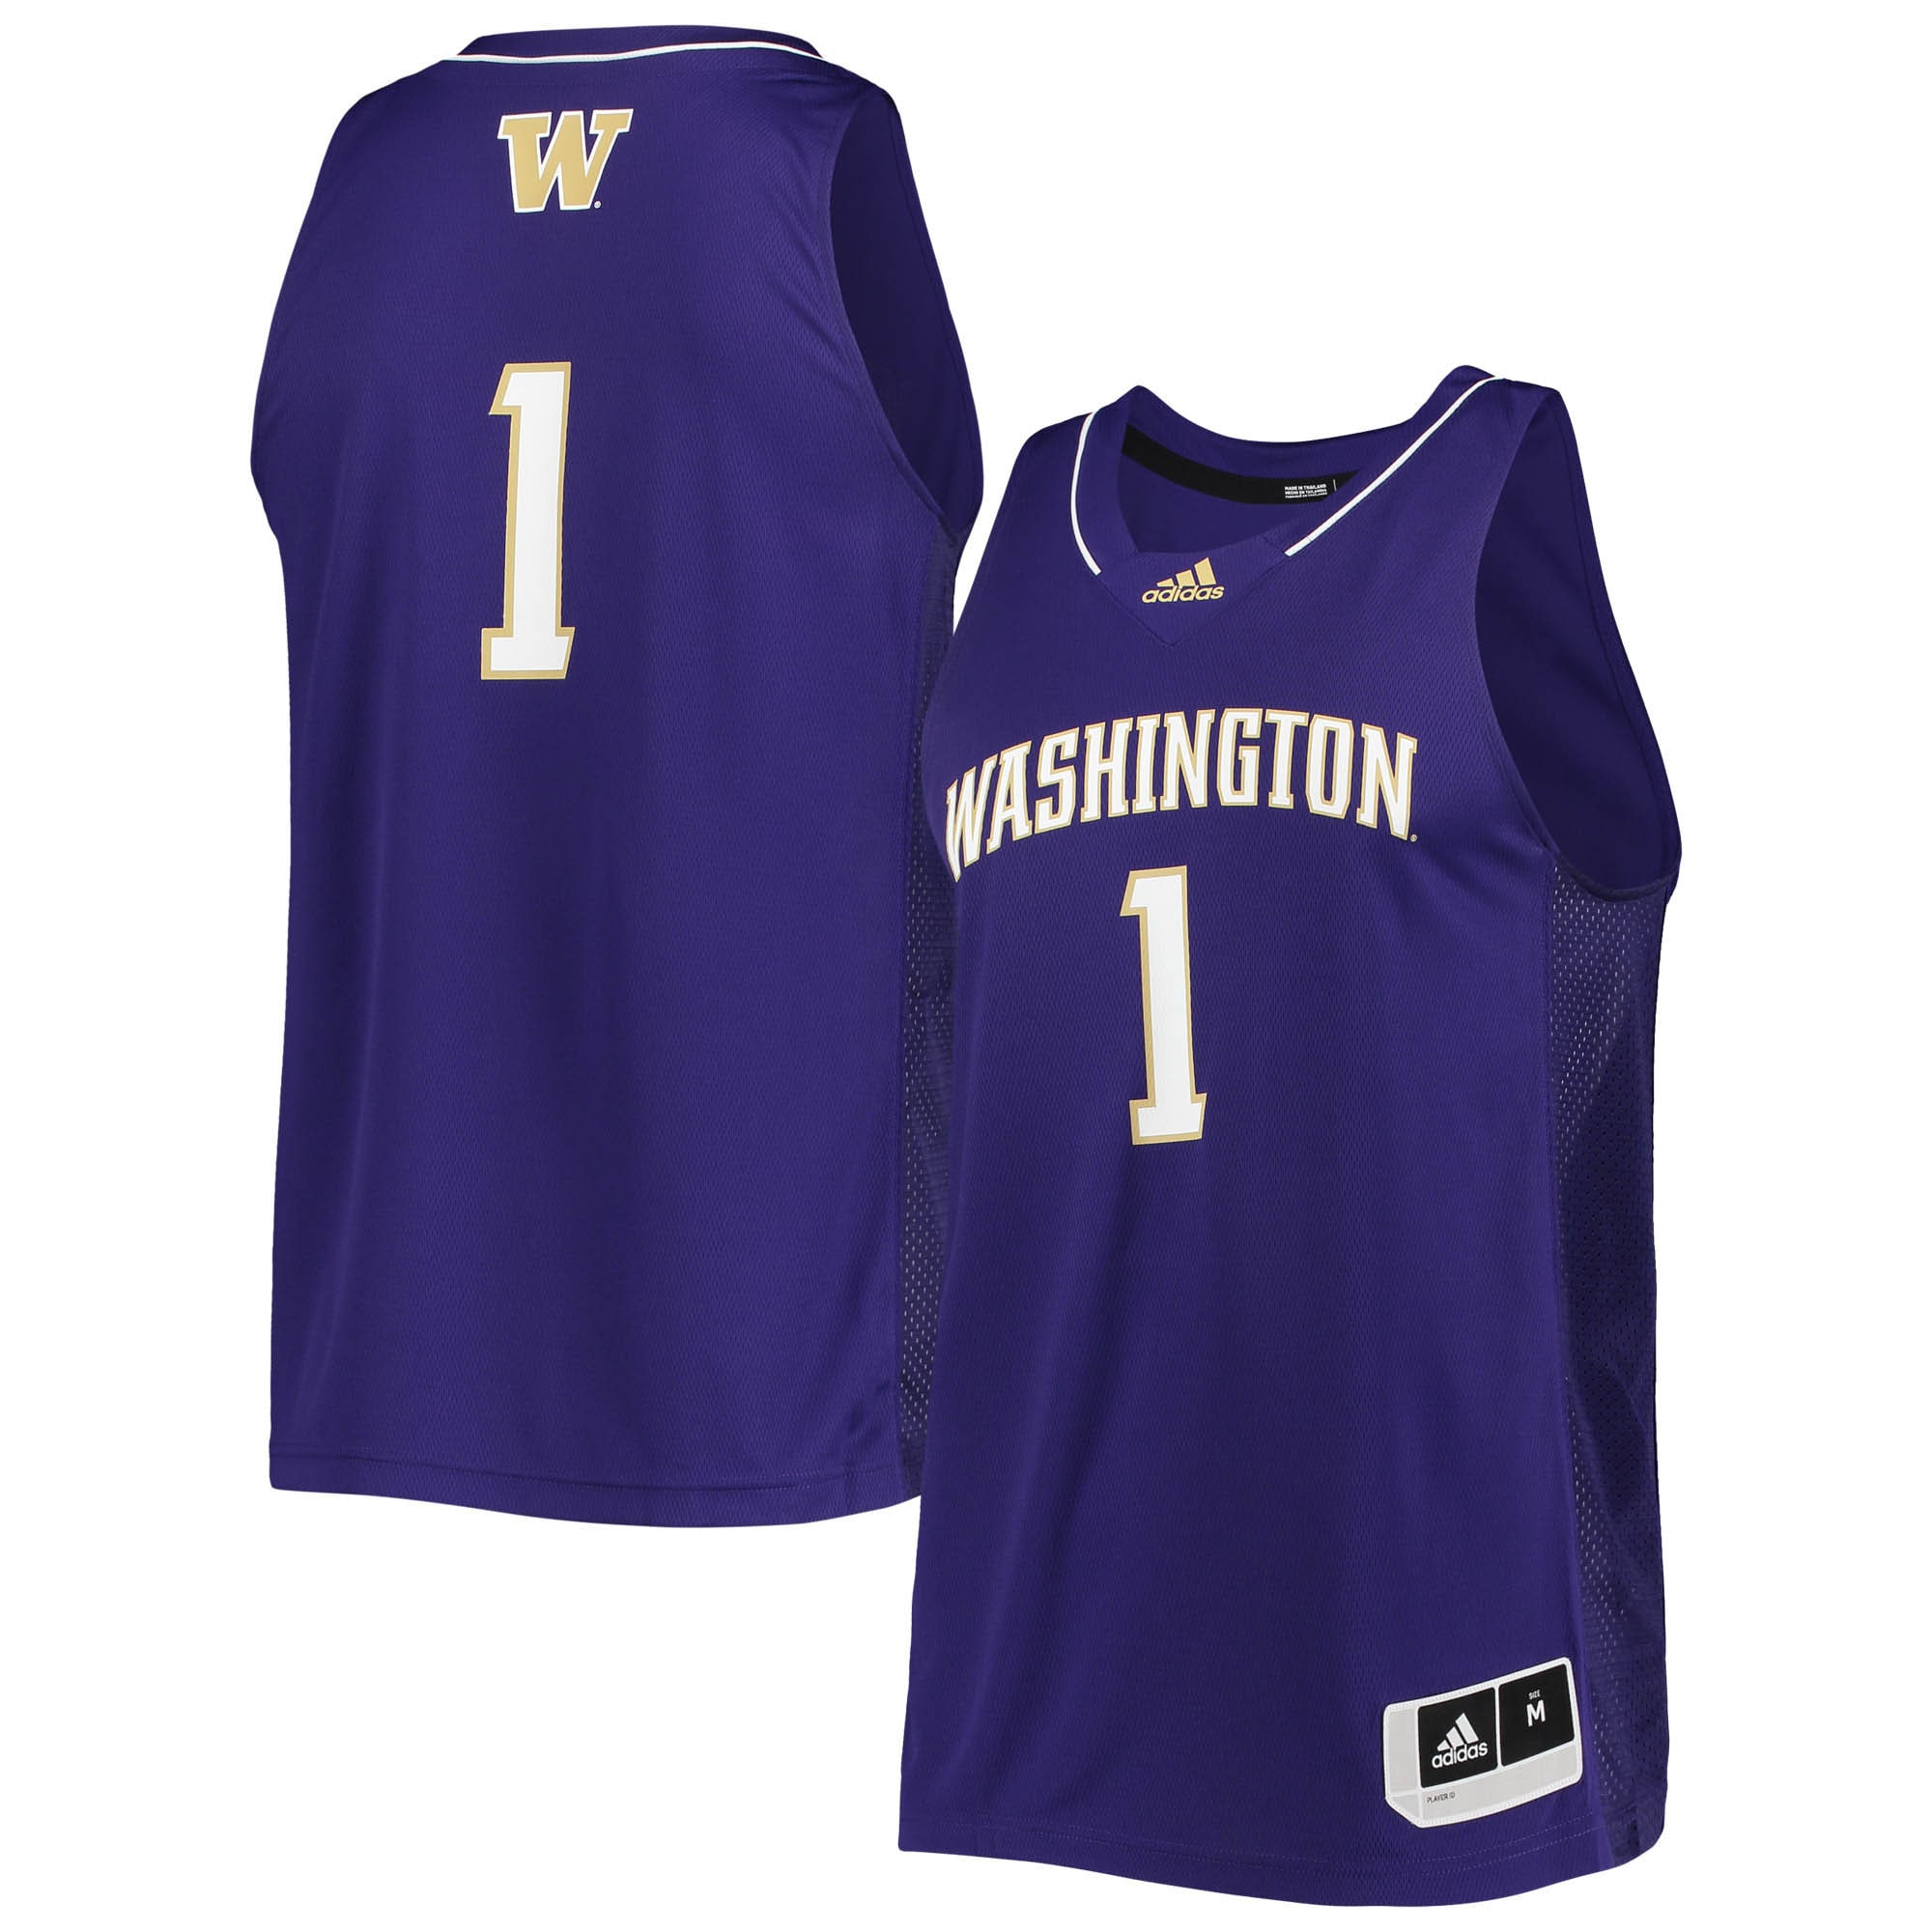 #1 Washington Huskies   Team Swingman Basketball Jersey - Purple For Youth Women Men